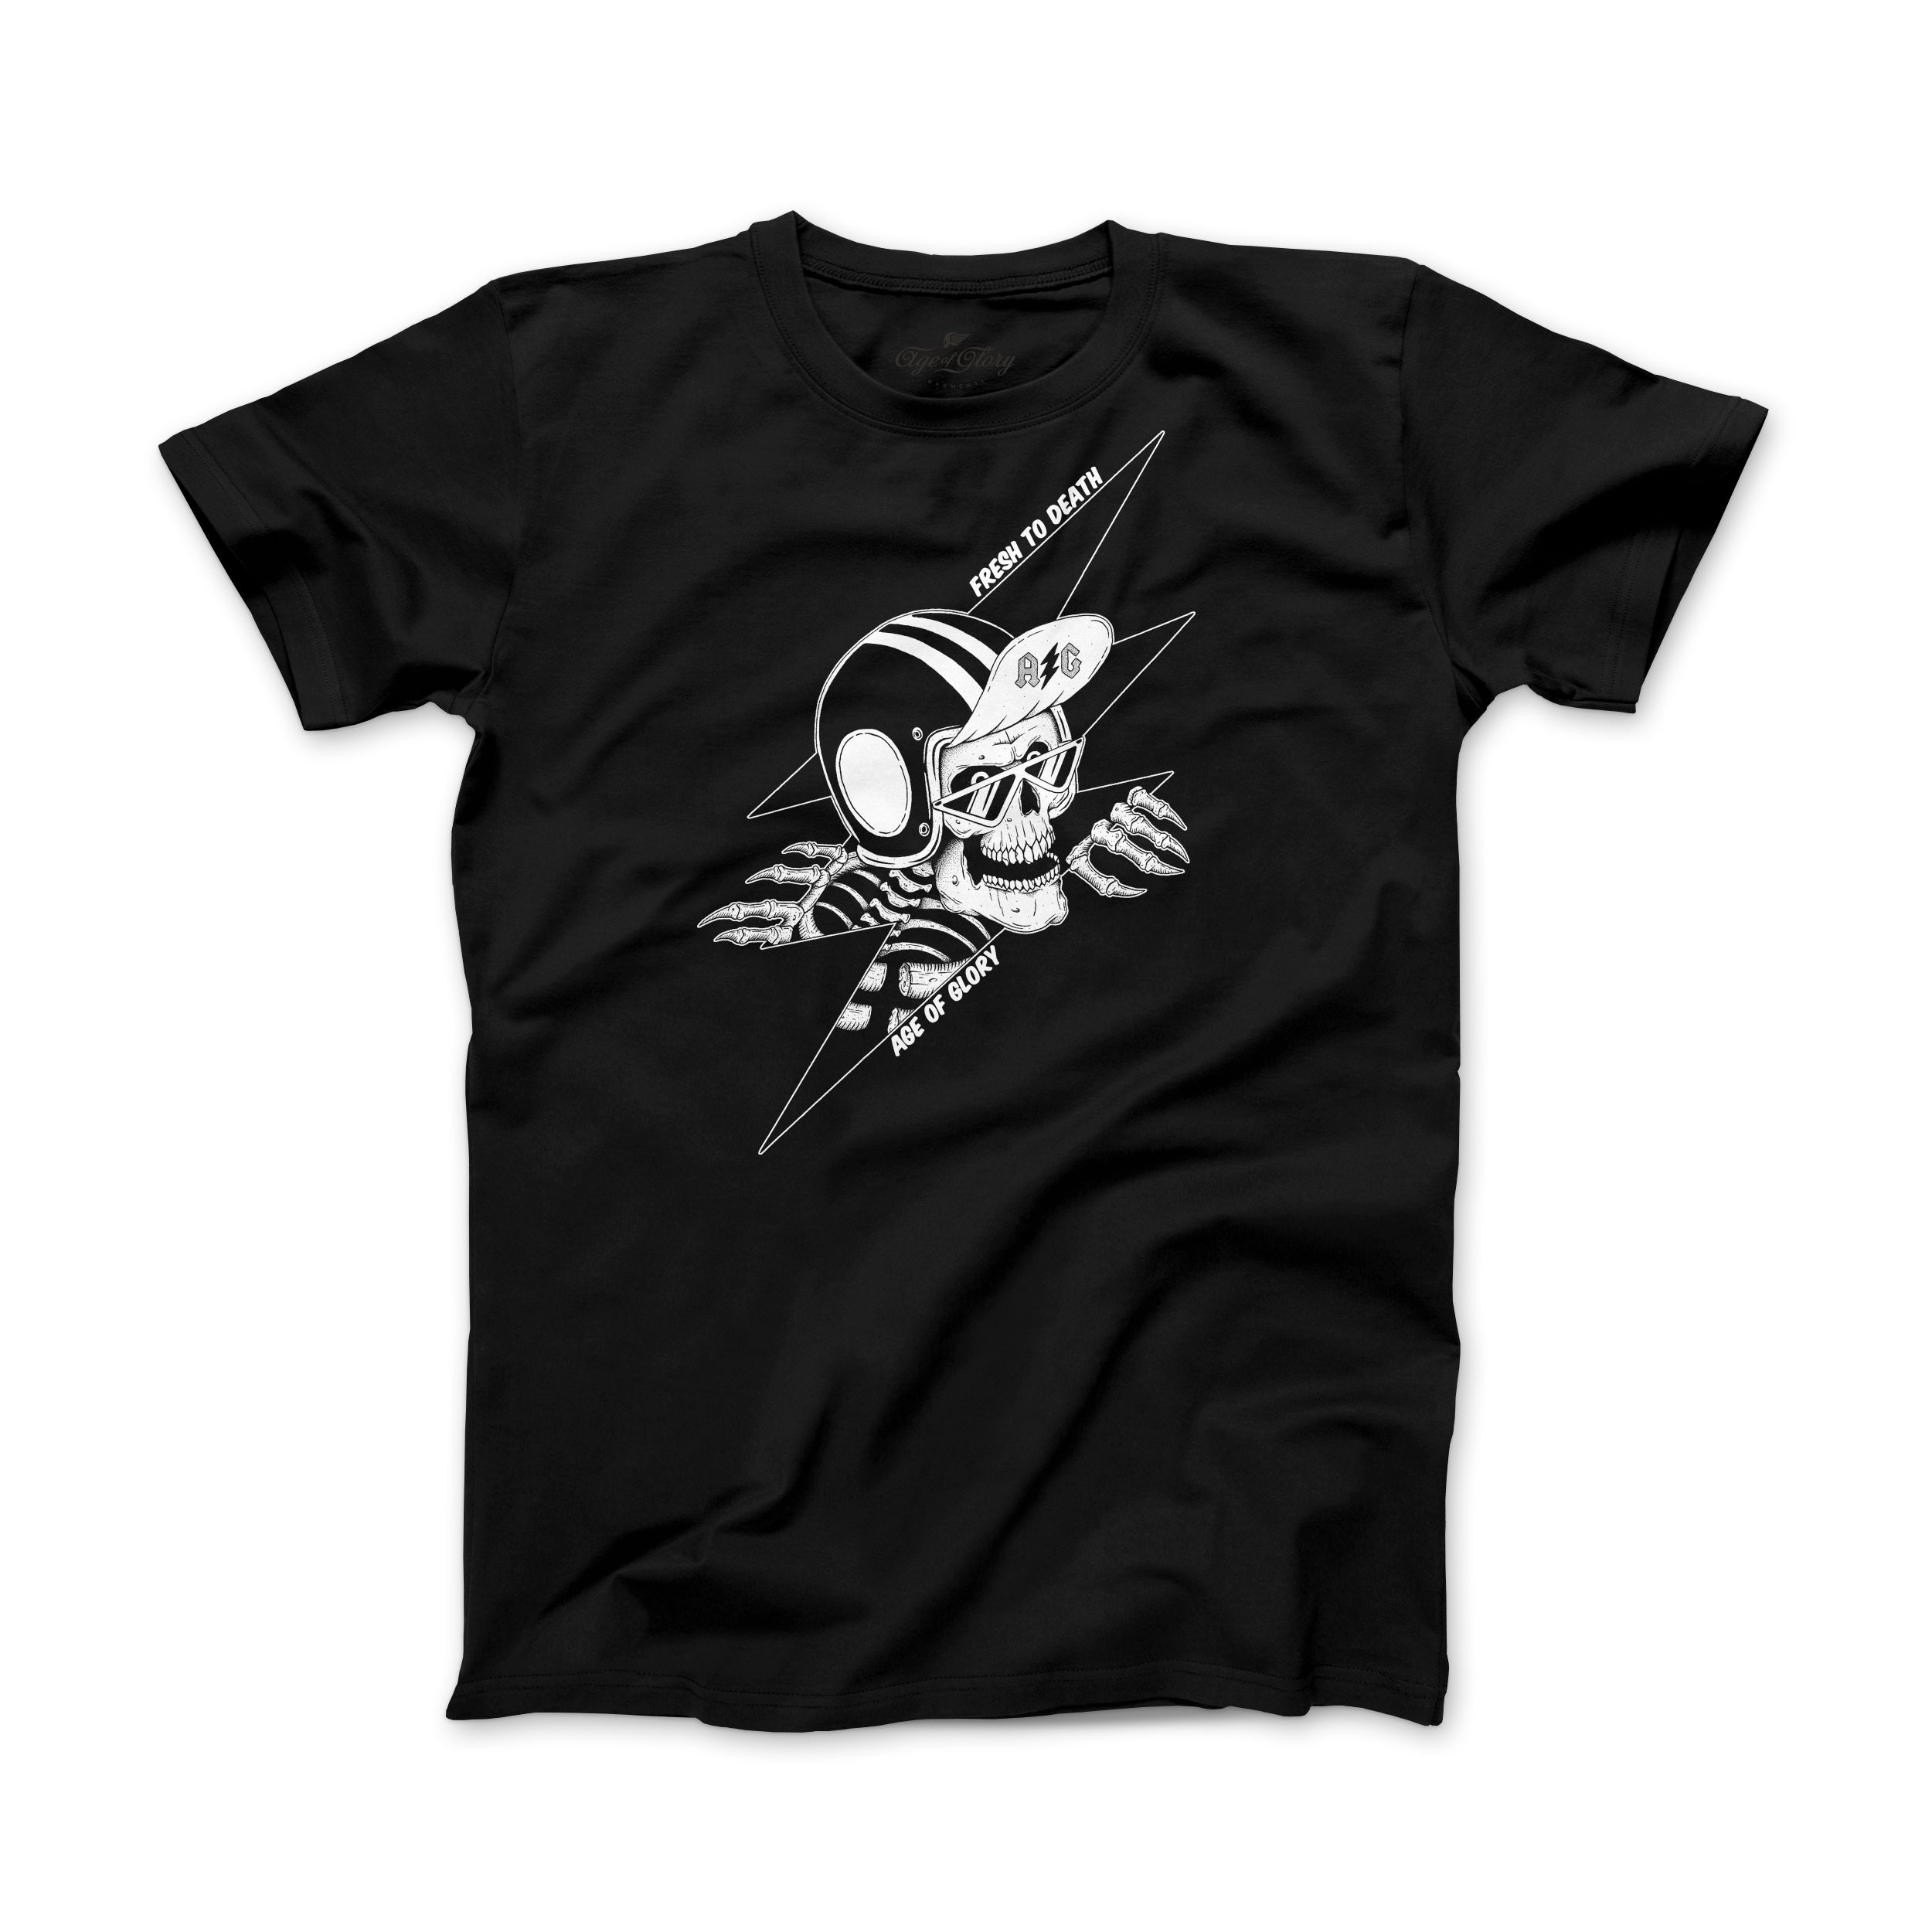 Age of Glory T-Shirt - Fresh to  Death Black